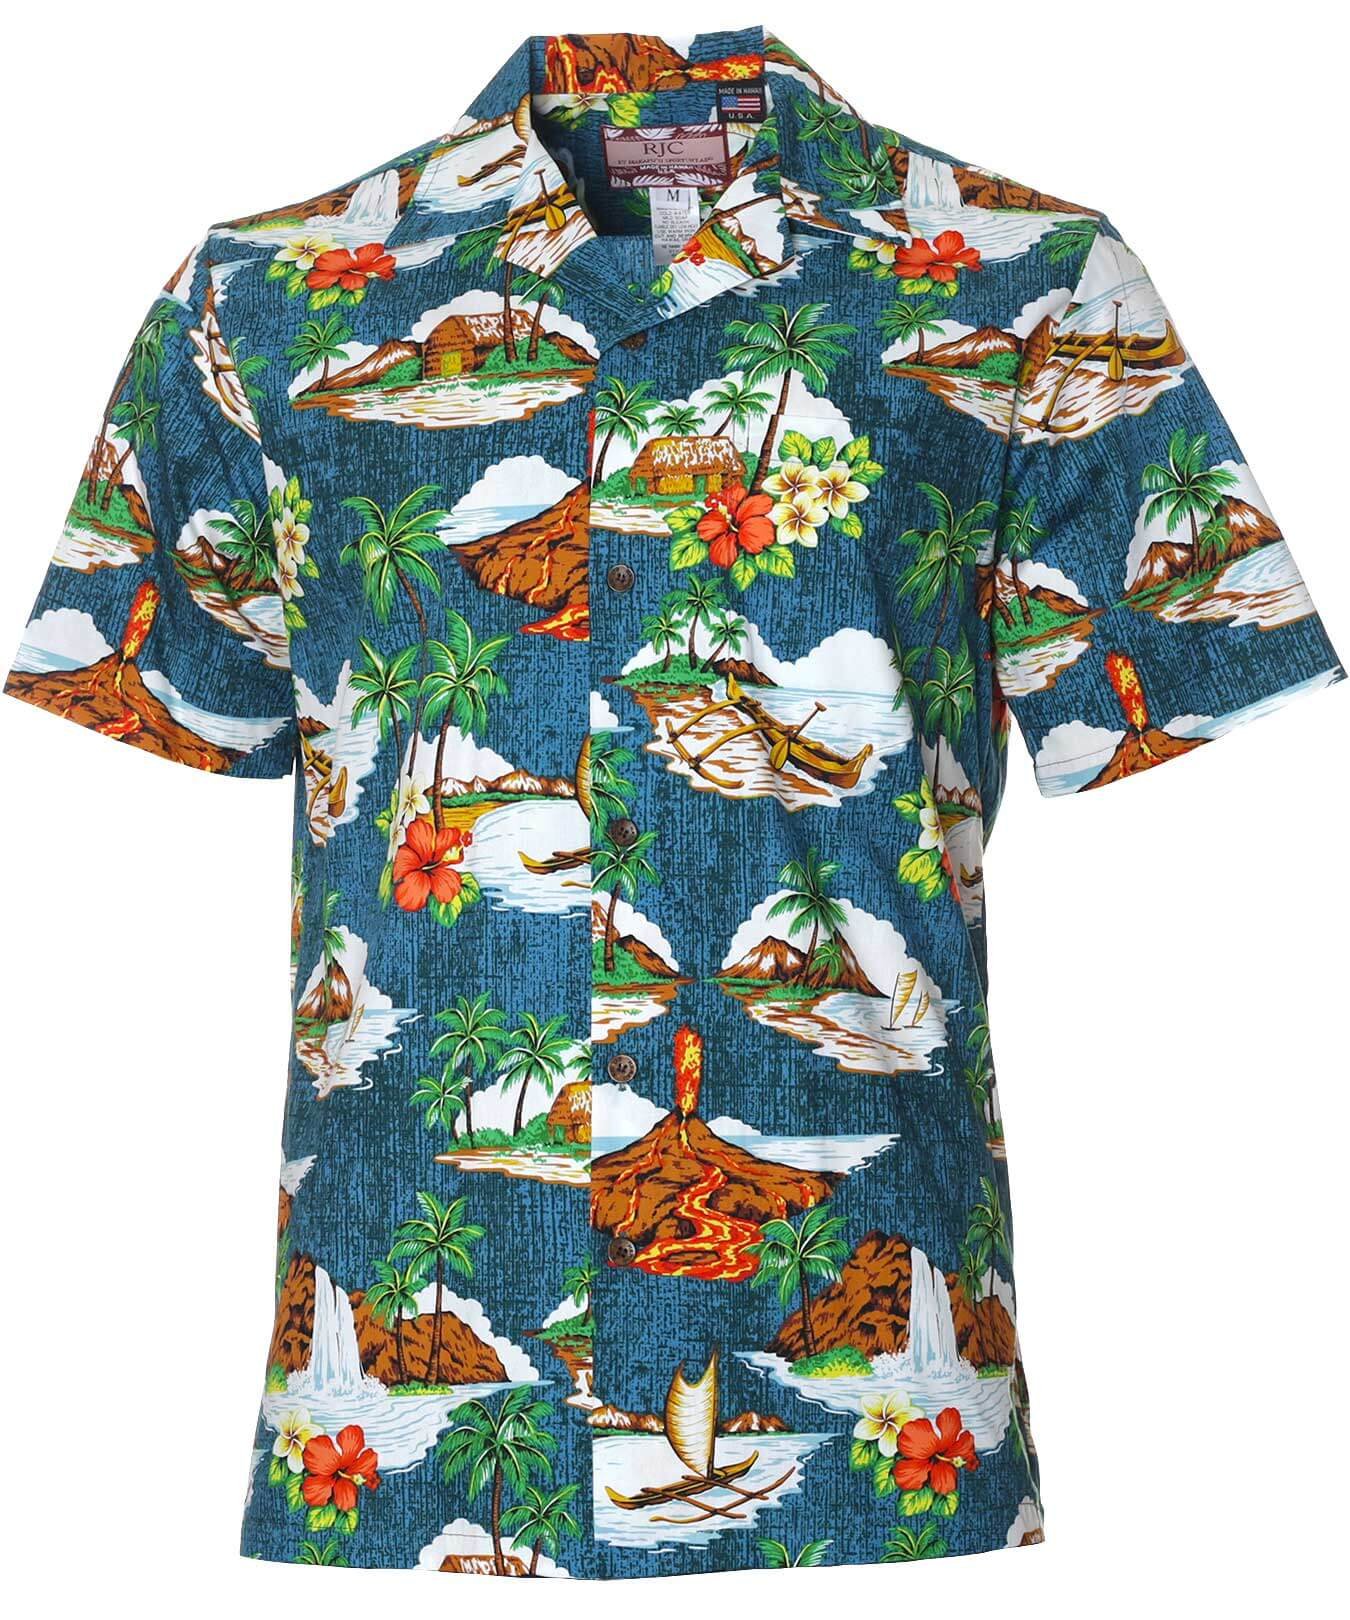 Big Island Cotton Men's Aloha Shirt Blue